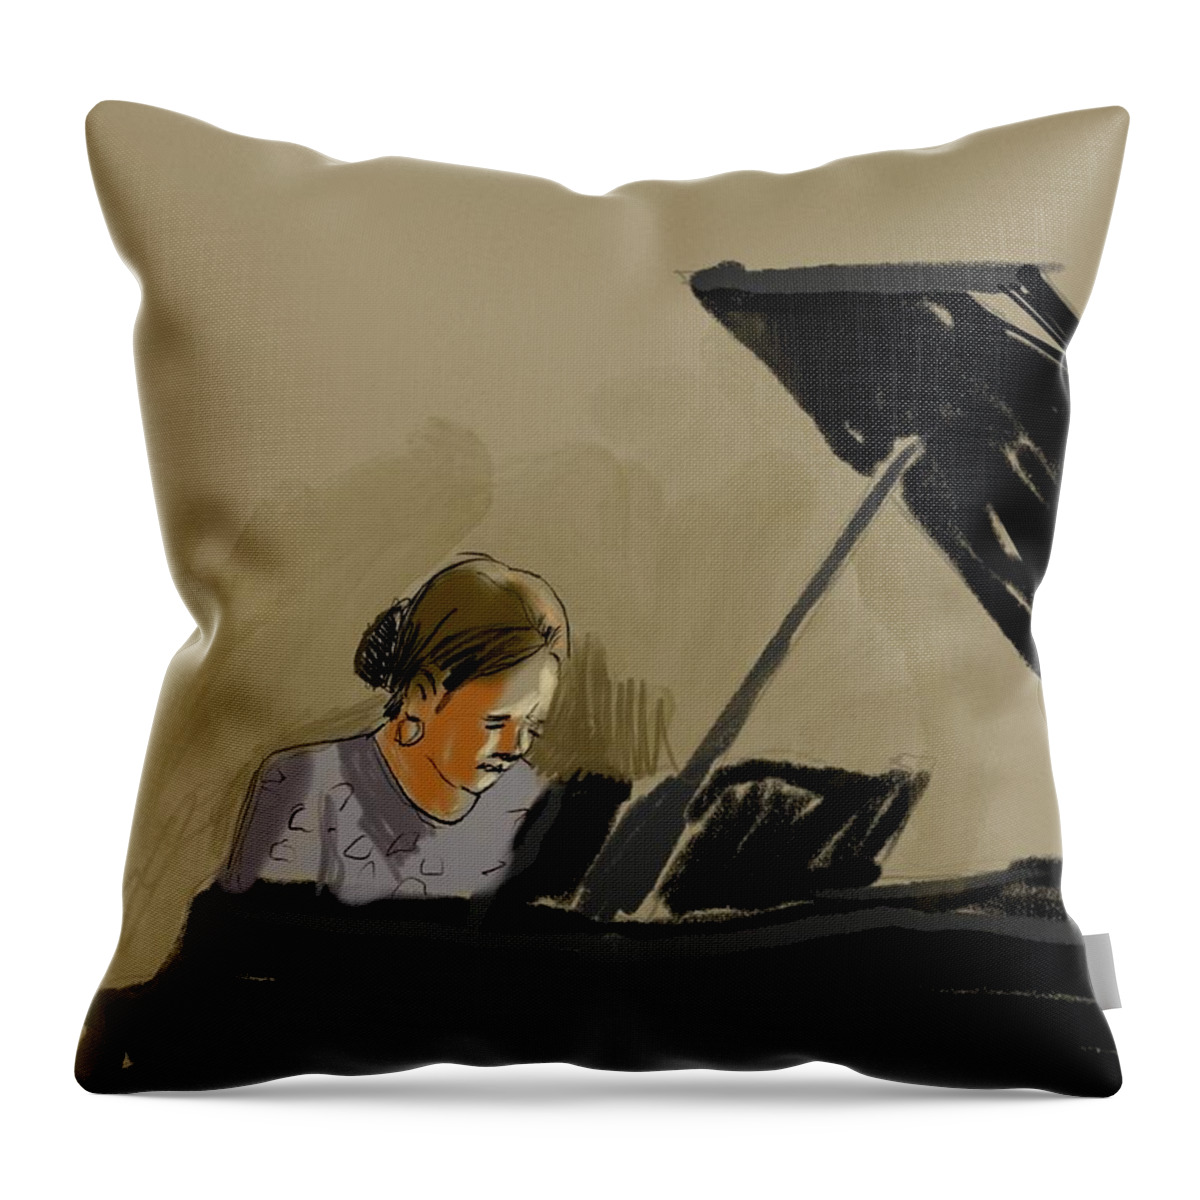 Piano Throw Pillow featuring the digital art Piano Recital by Don Morgan